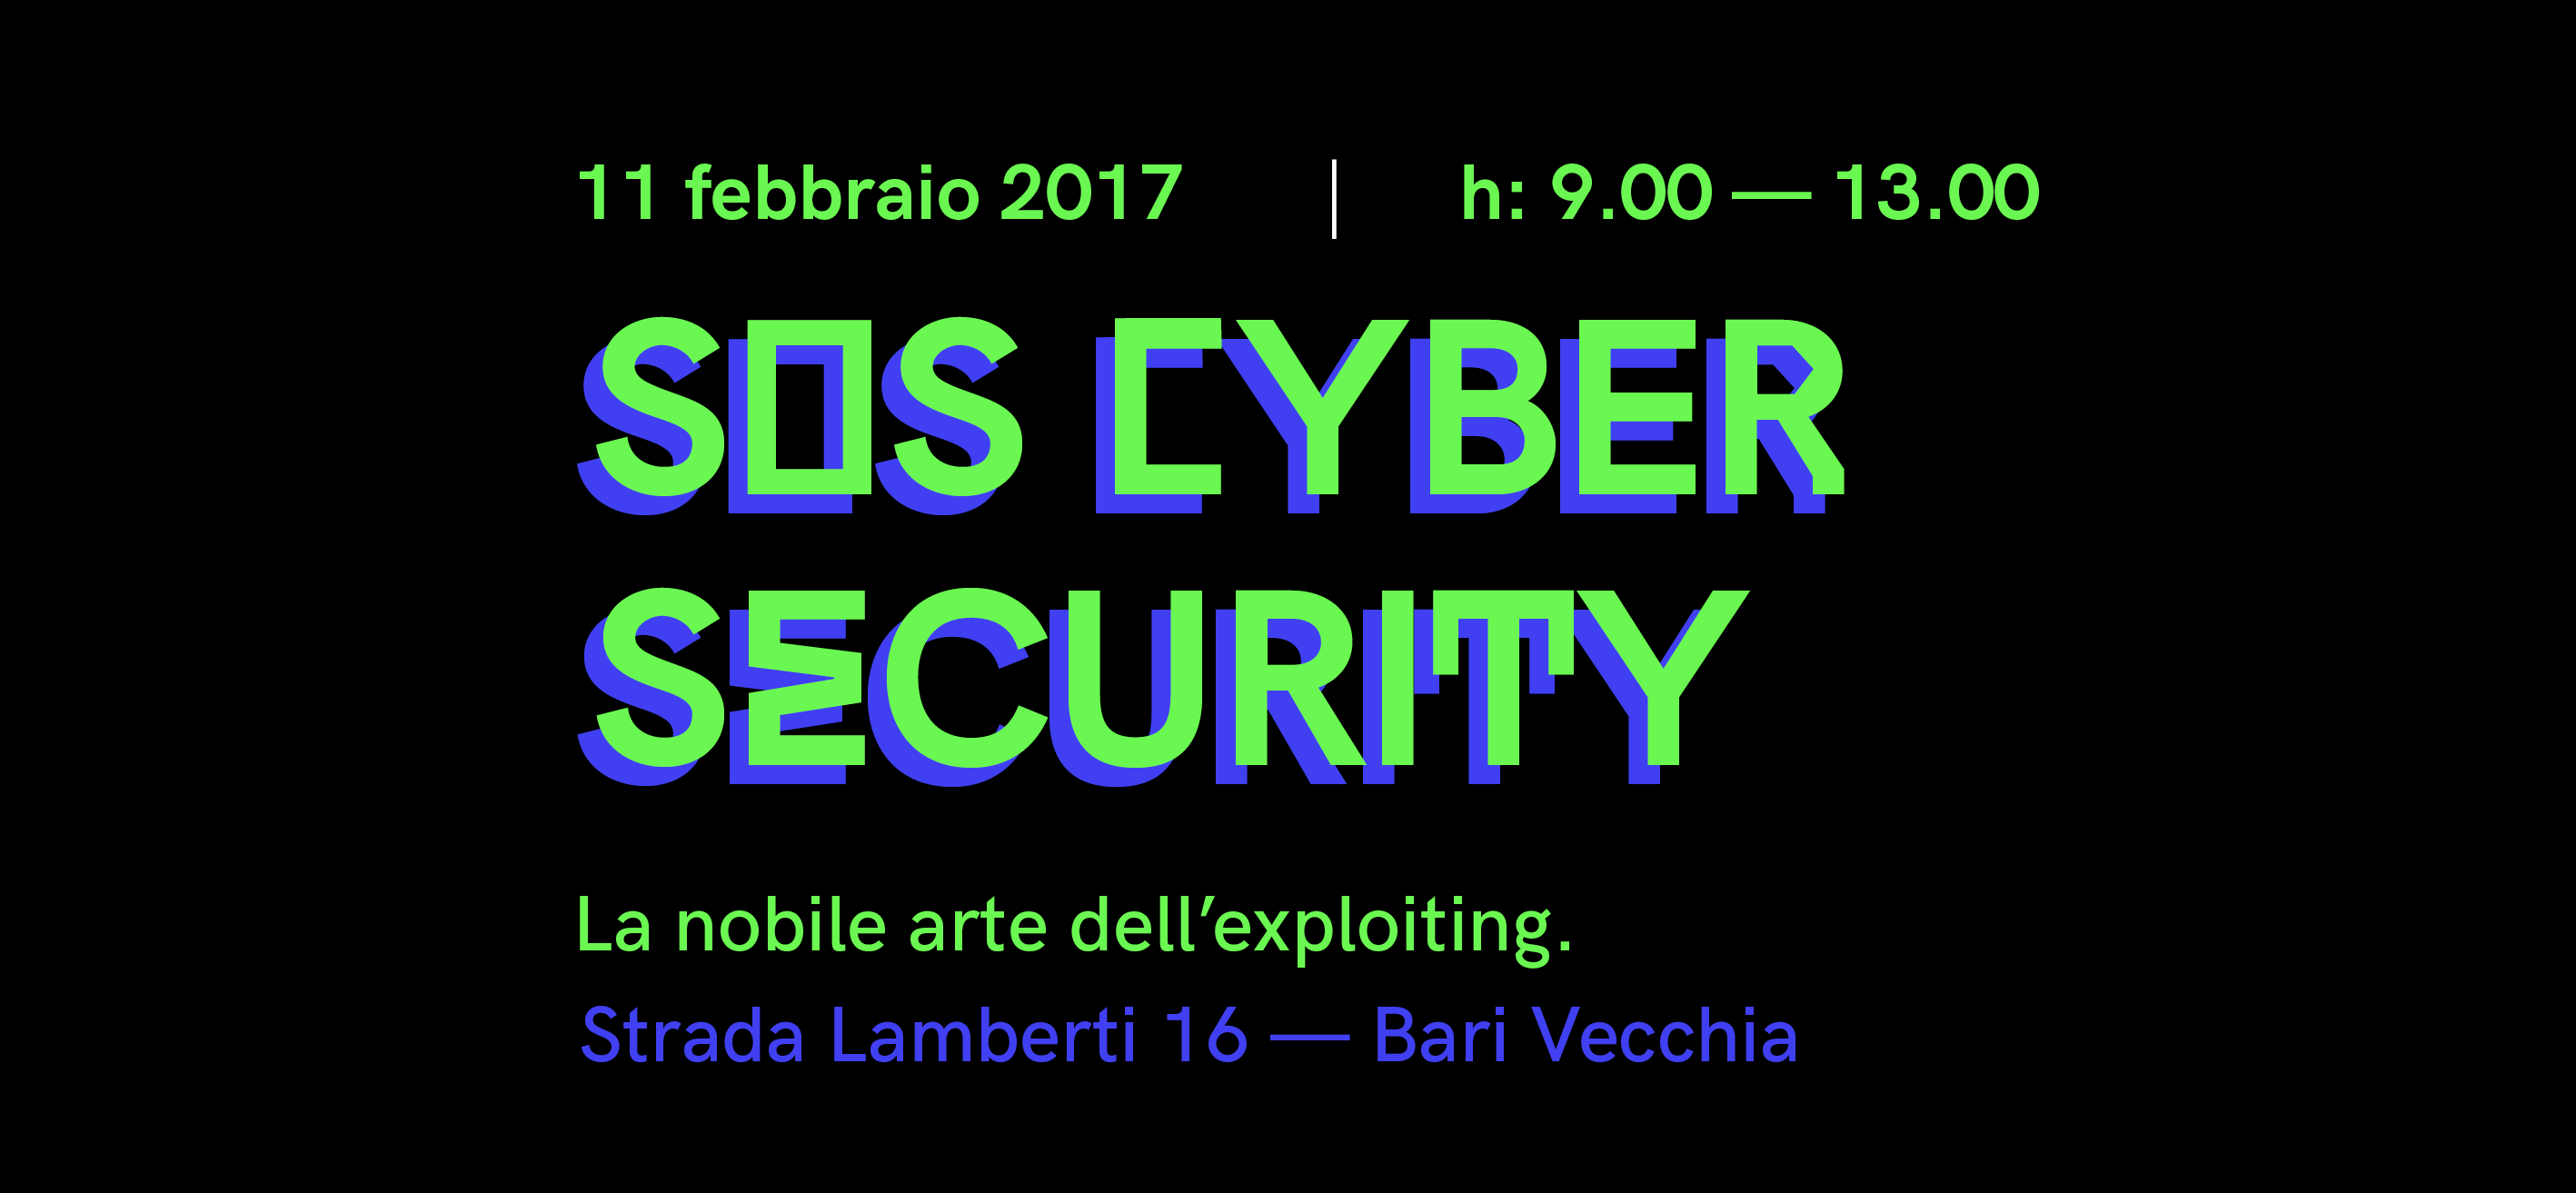 SOS Cyber Security